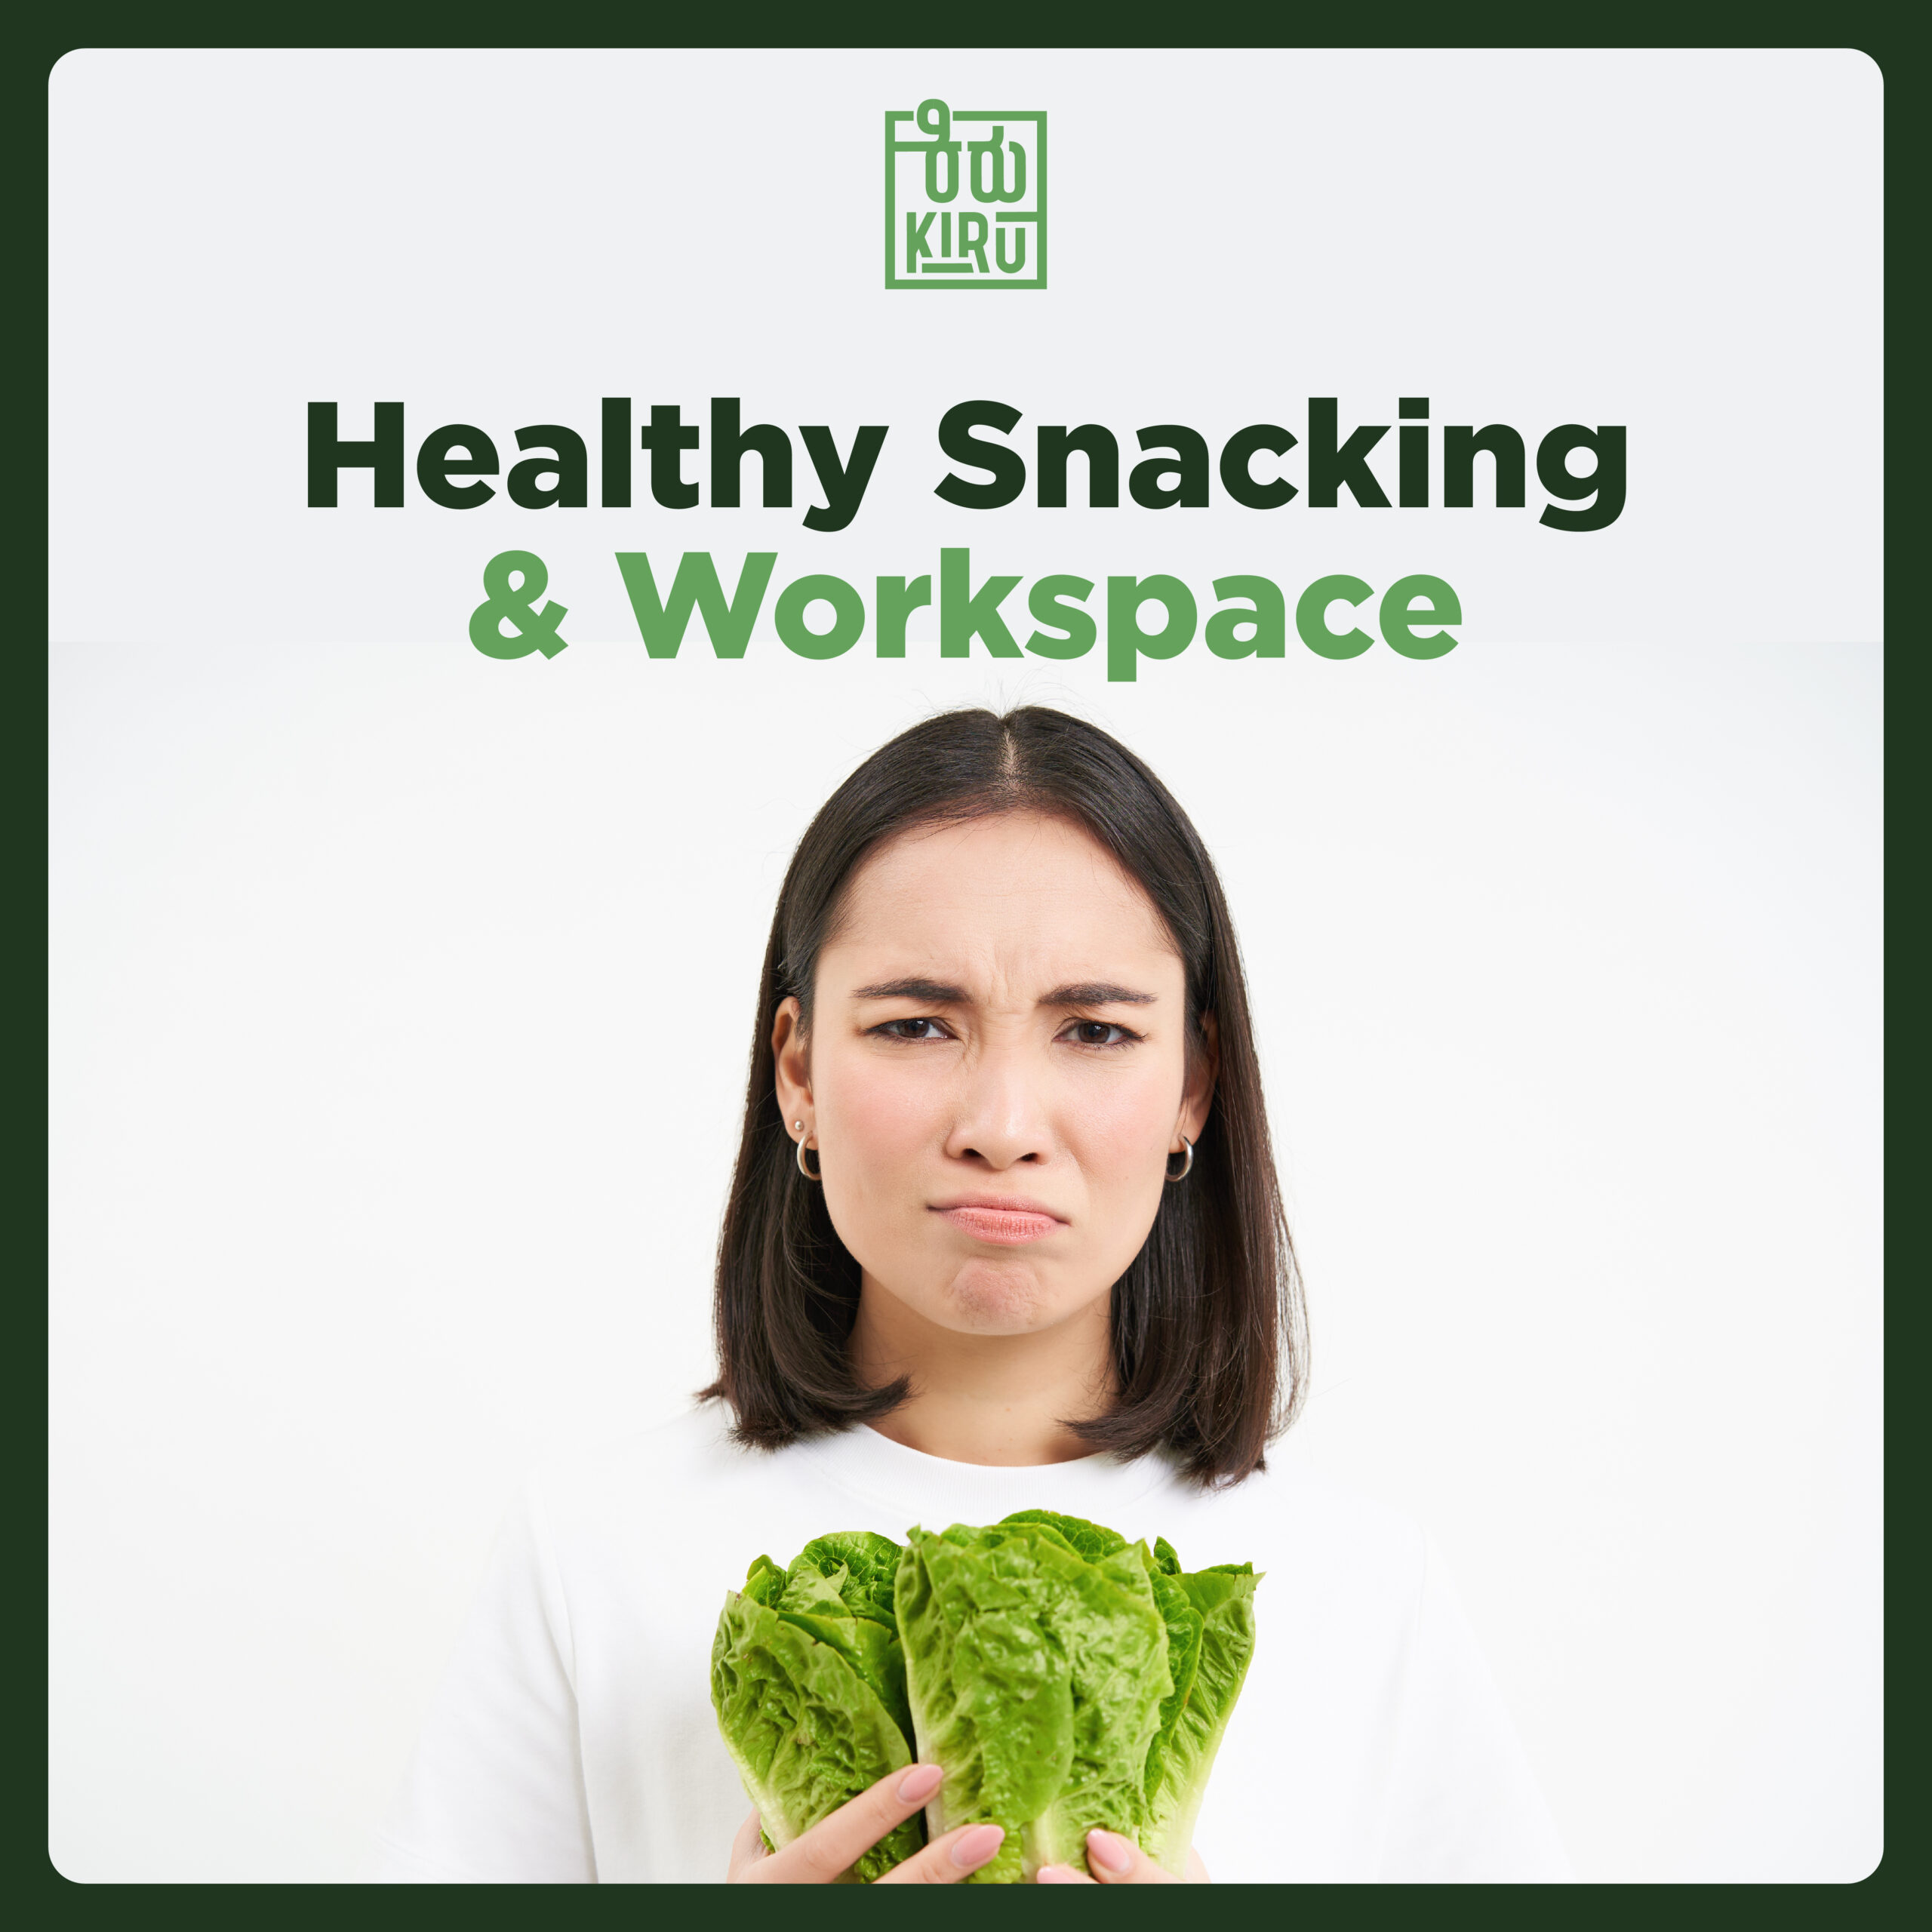 kiru millet healthy office snacks for employees' productivity